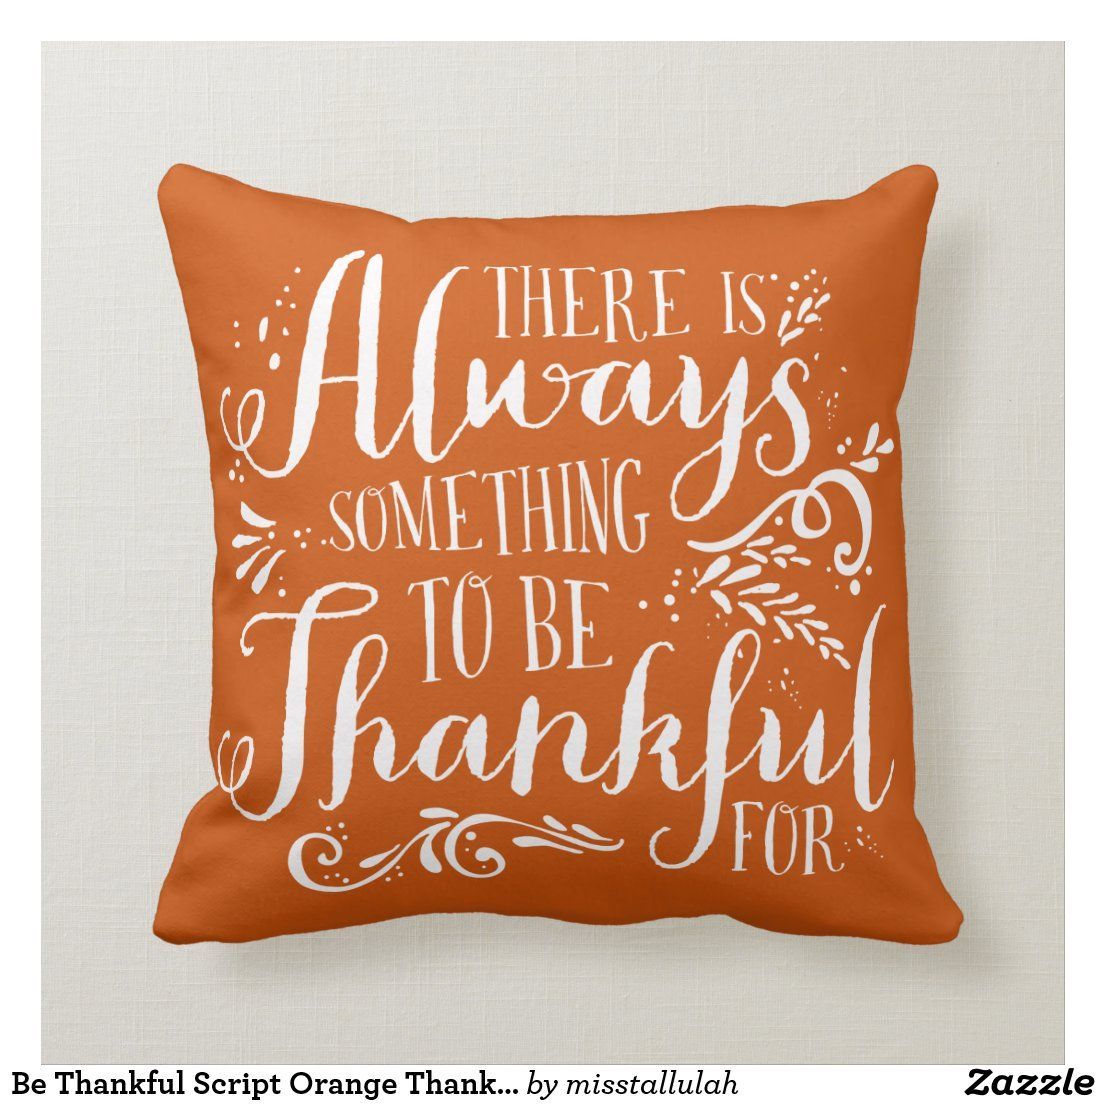 Be Thankful Script Orange Thanksgiving Pillow -   20 thanksgiving crafts diy home decor ideas